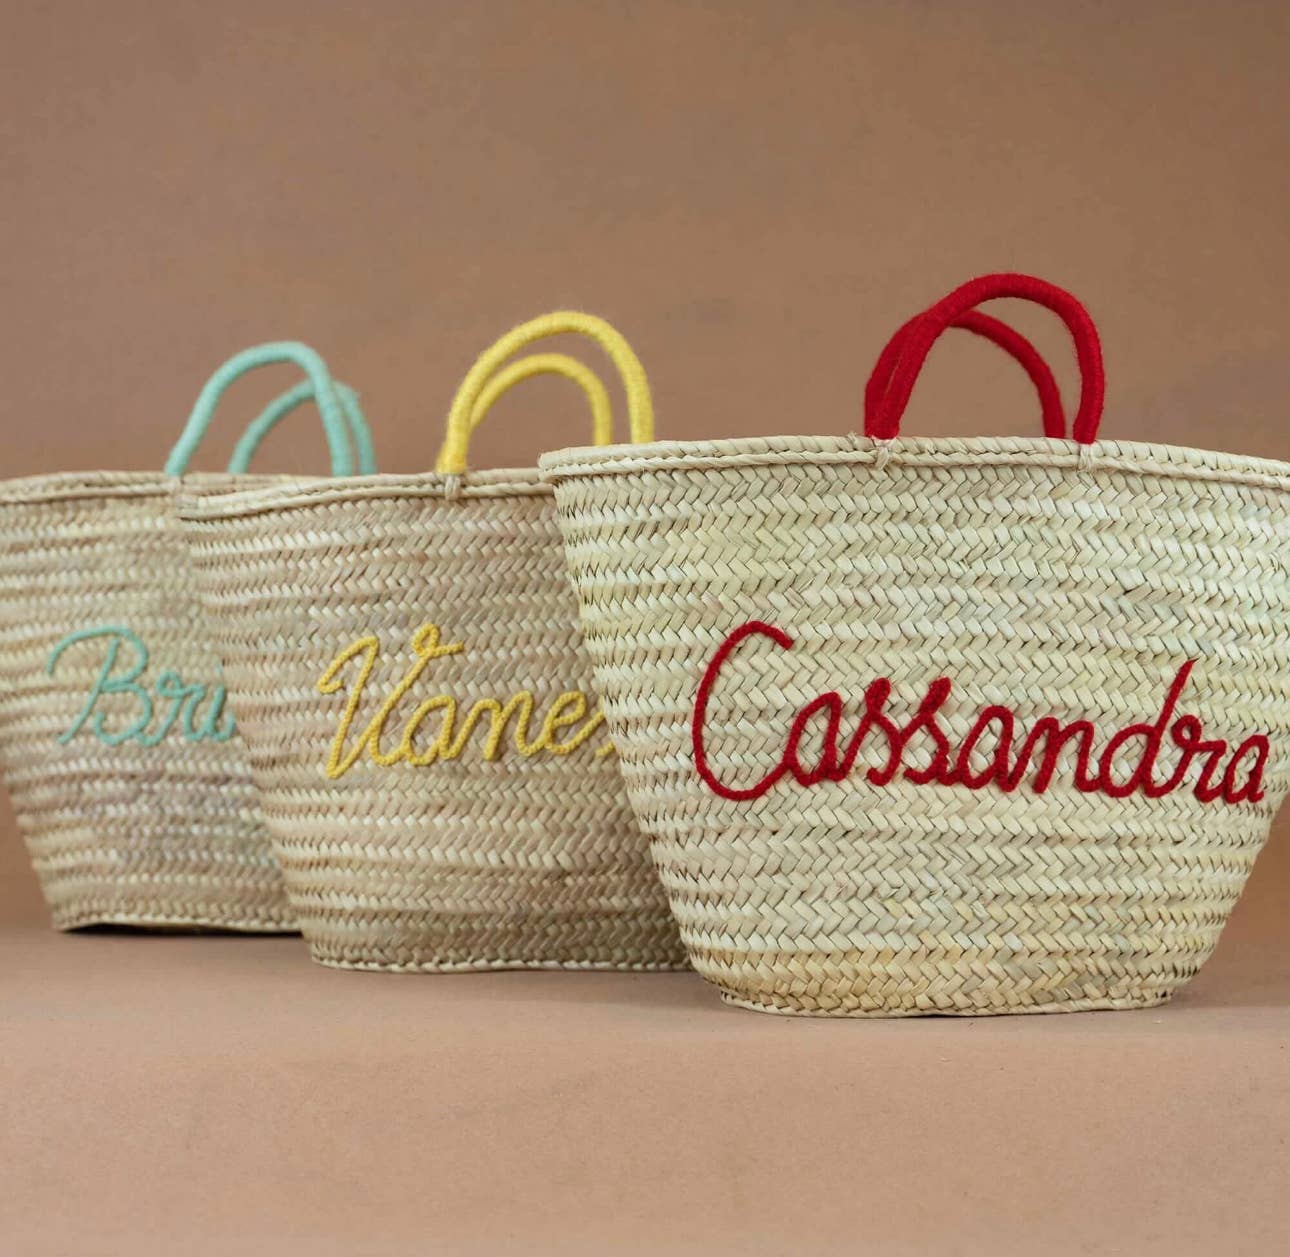 PERSONALIZED BASKET, customized straw Beach bag - WHOLESALE